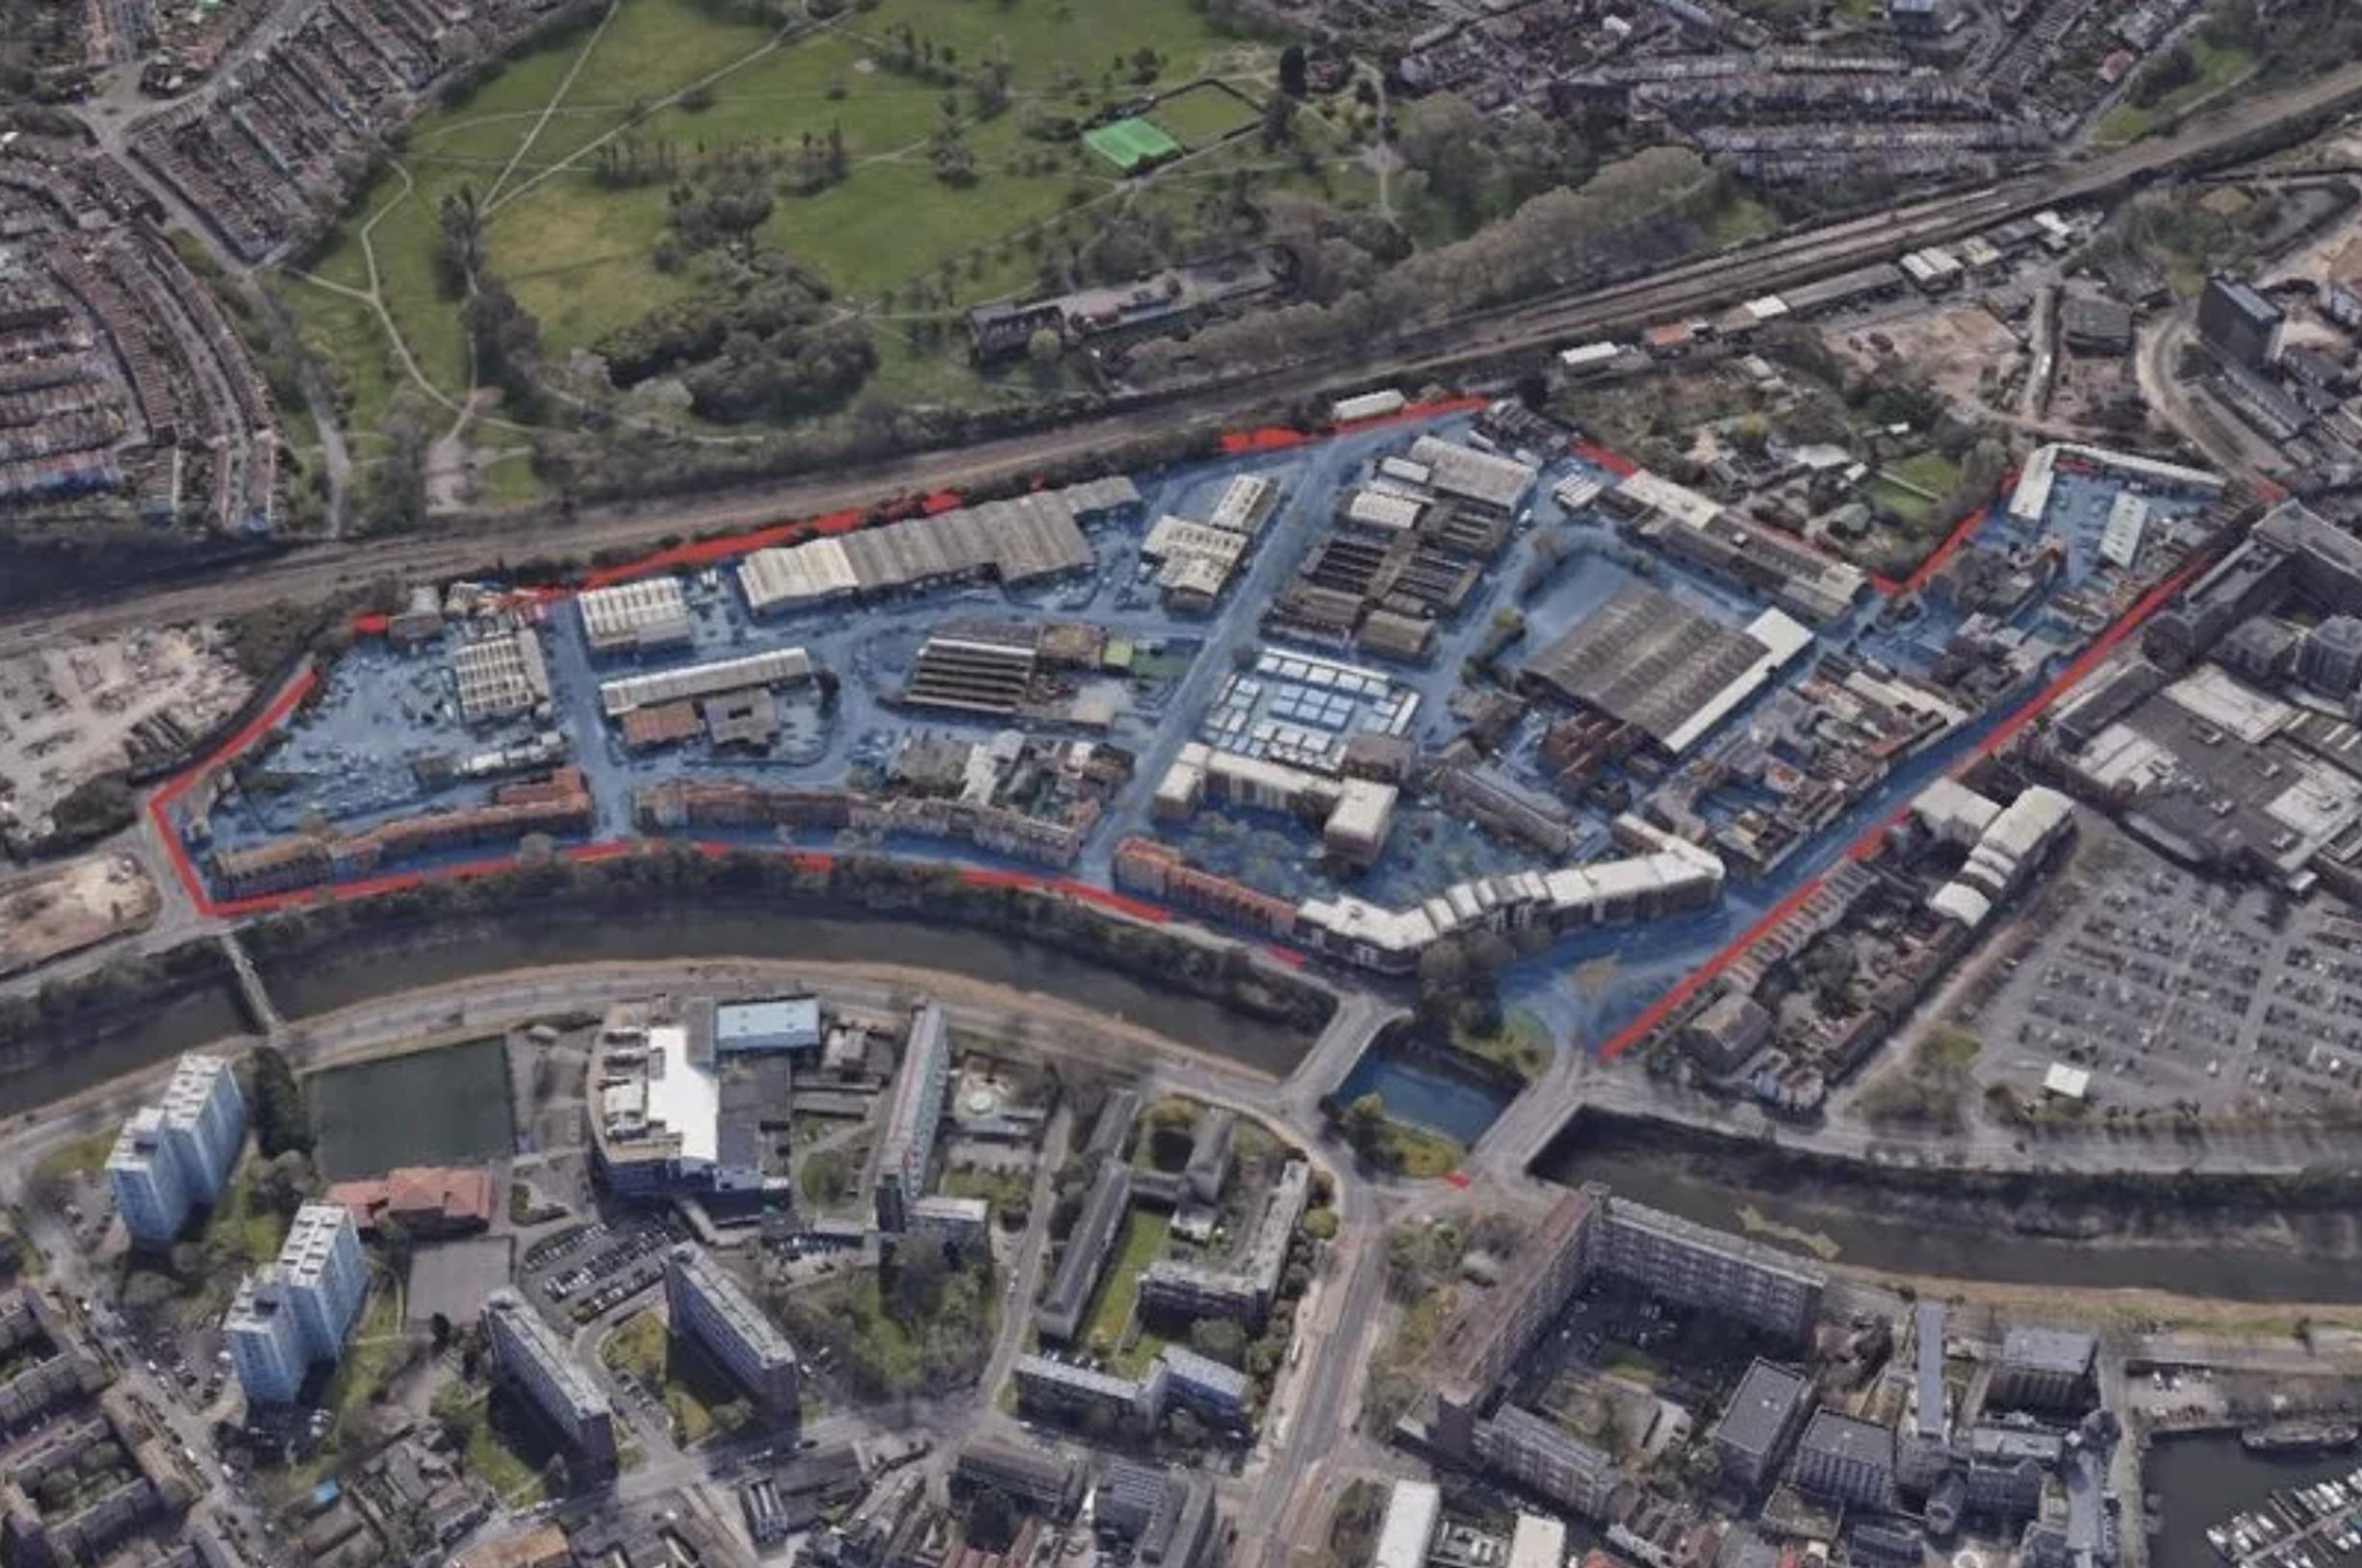 A major regeneration project in South Bristol: credit – Google Earth